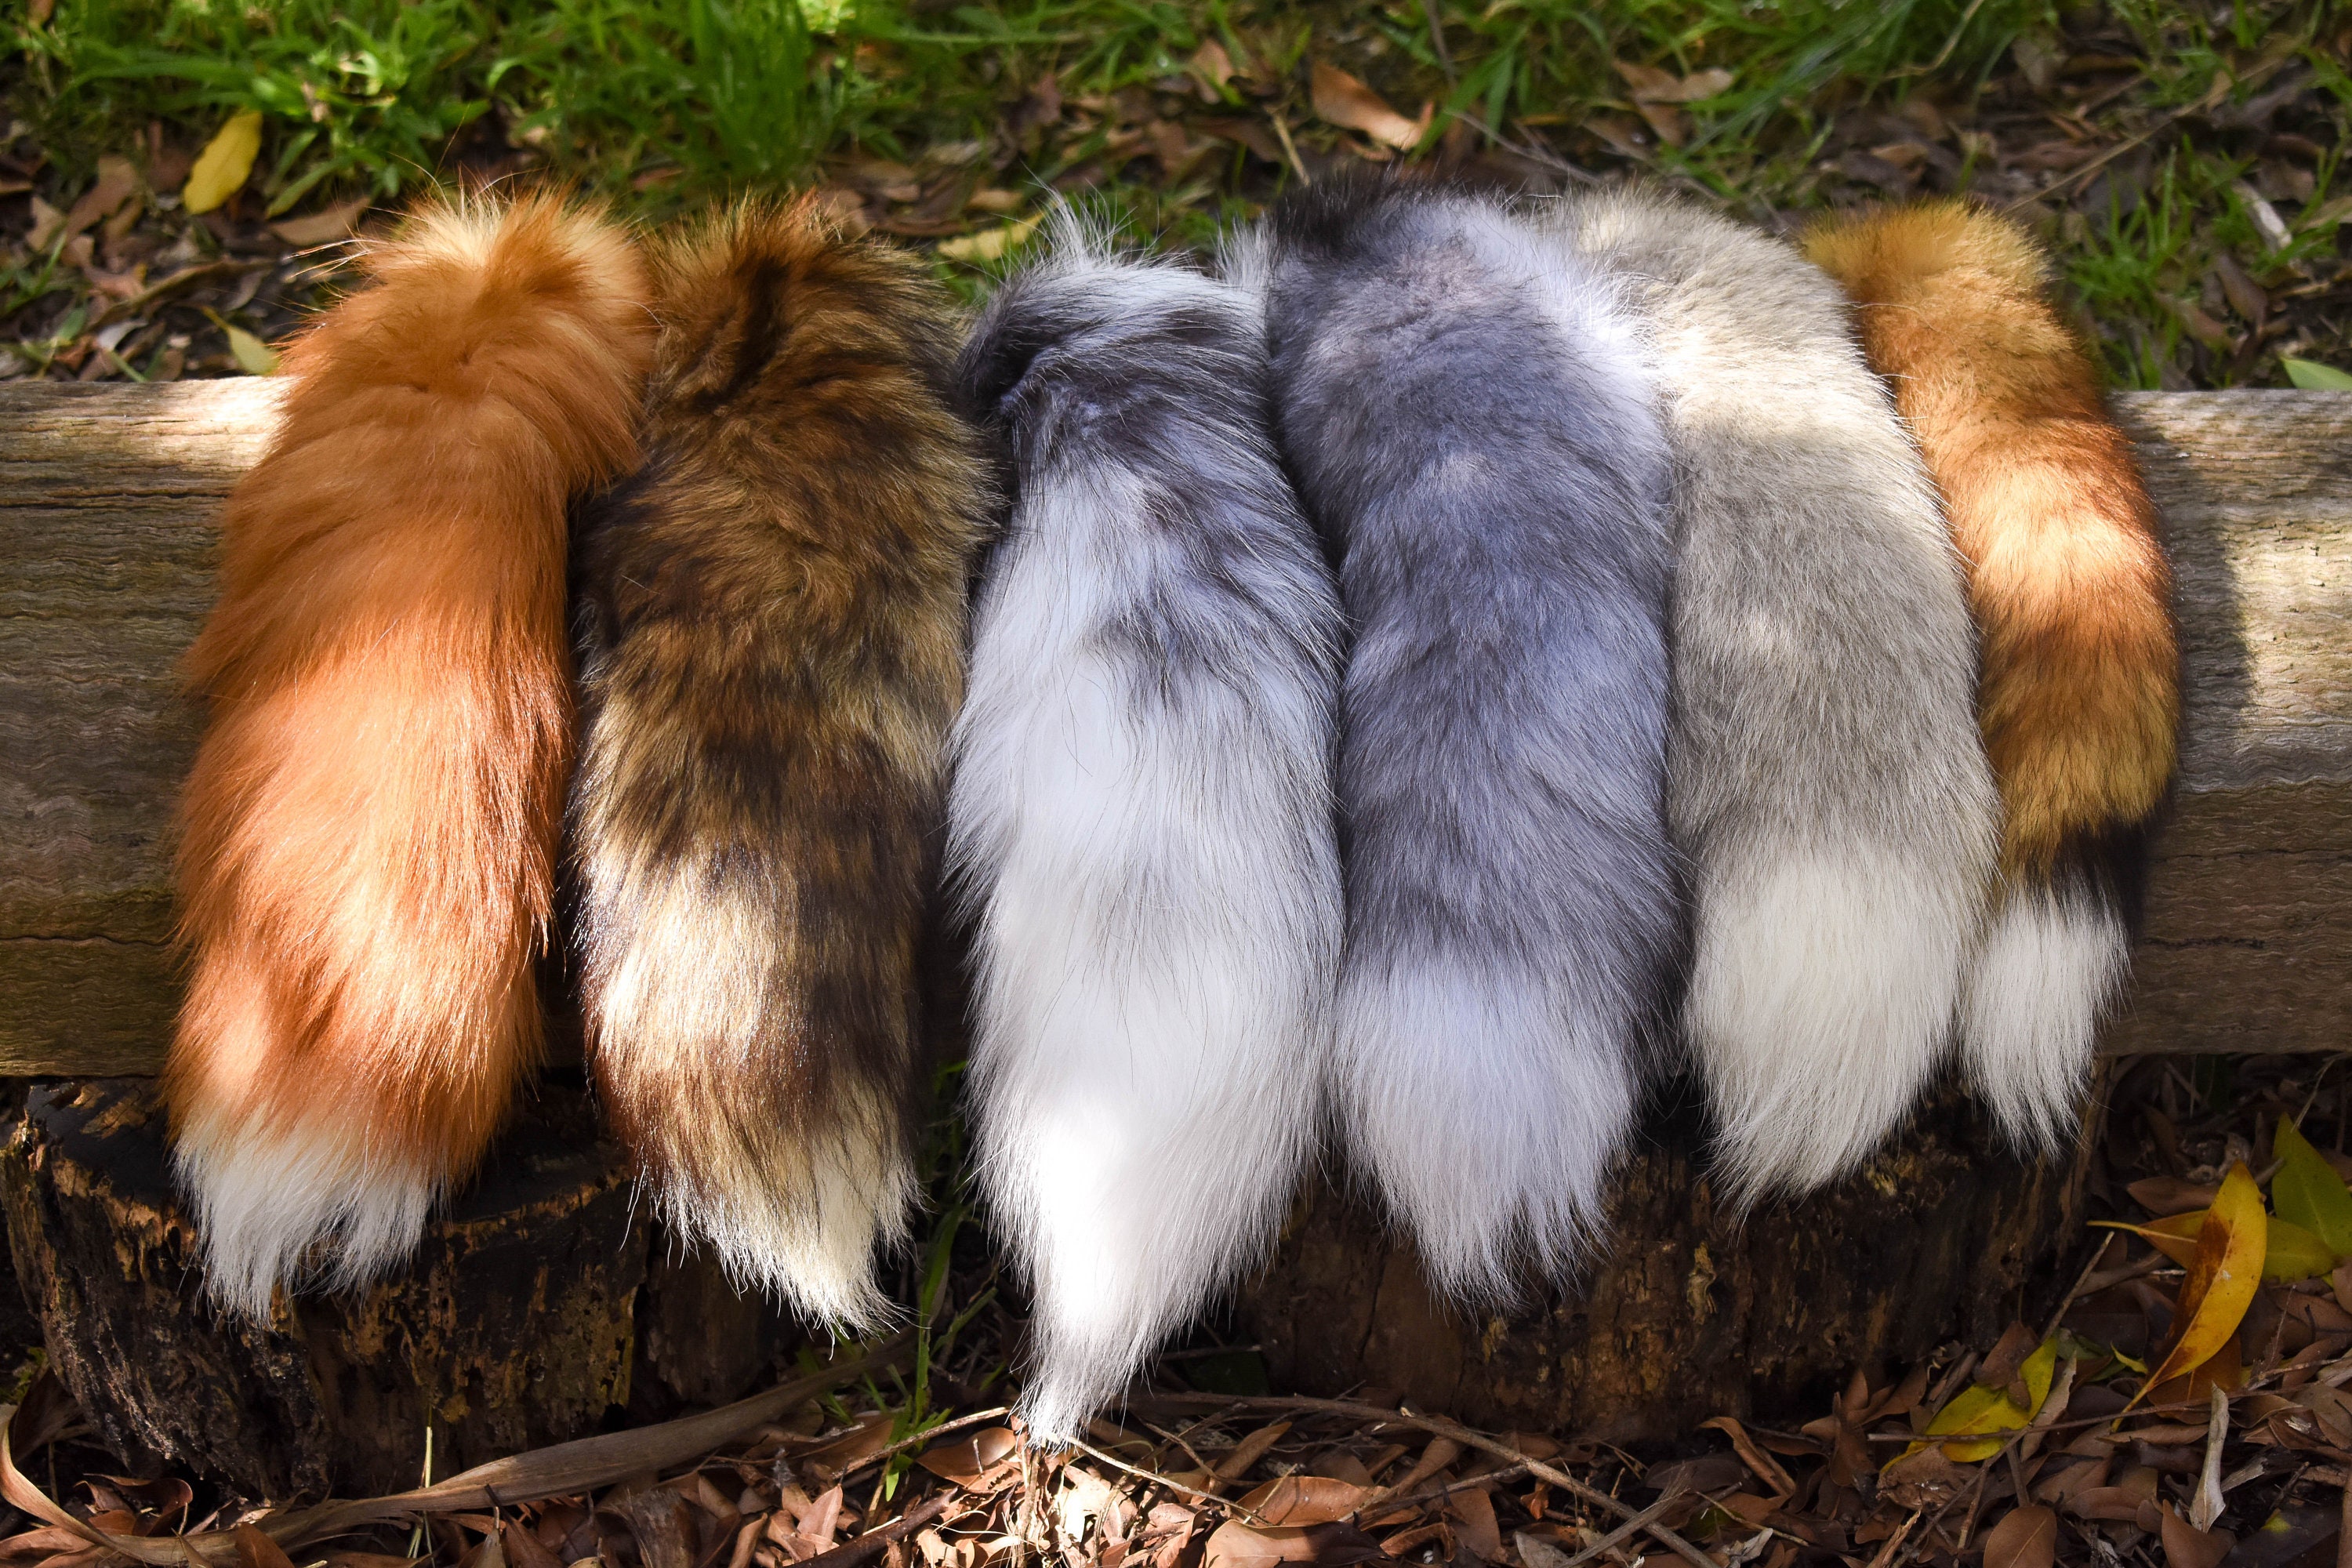 Fur Fox Tail Fashion Accessory Stock Photo - Image of head, animal:  238563062